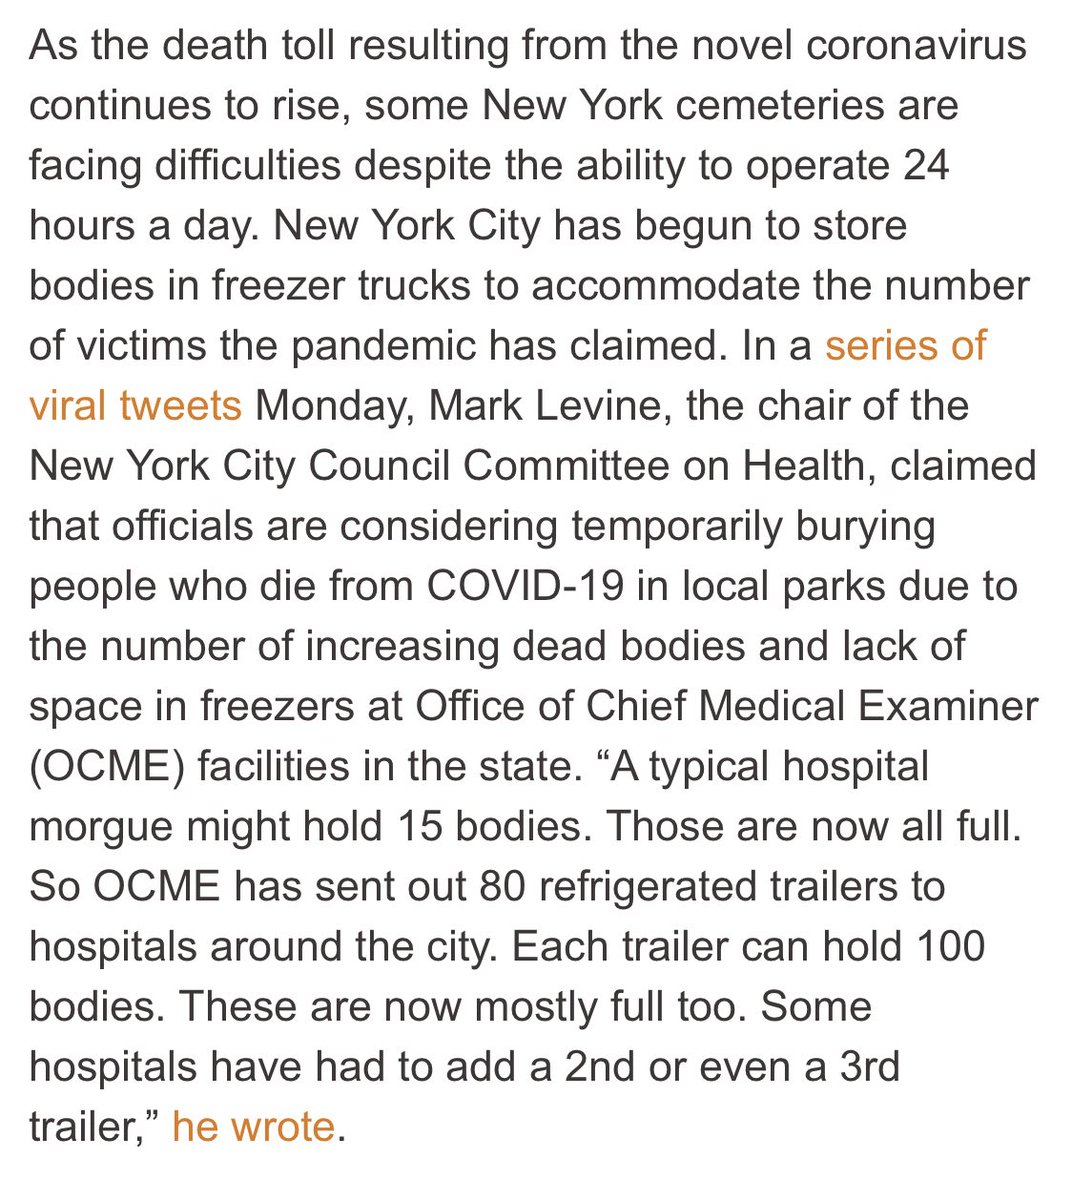 Horrific Twitter thread by New York City health committee chair raises concerns on  #COVID19 deaths | via  @dailykos  #CrimesAgainstHumanity  #TrumpLiesAmericansDie   https://www.dailykos.com/story/2020/4/6/1934872/-Horrific-Twitter-thread-by-New-York-City-health-committee-member-raises-concerns-on-COVID-19-deaths